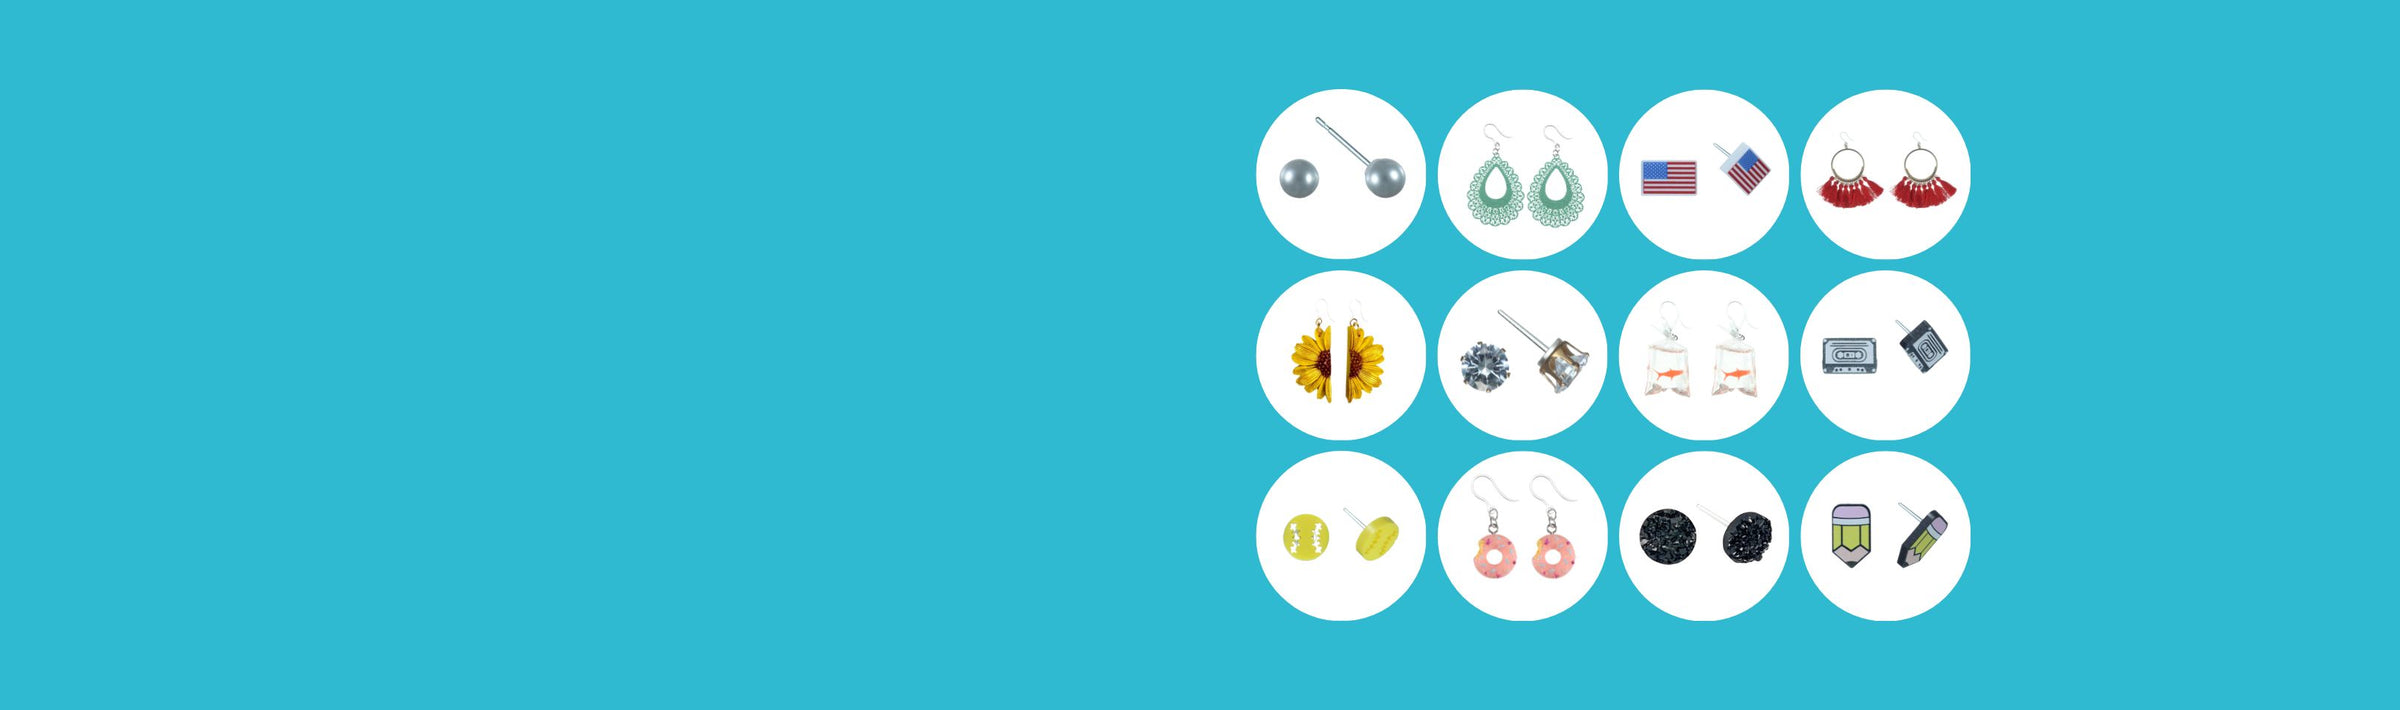 Blue Smiley Face Earrings, Stud Earrings, Plastic Post Earrings, Studs for Sensitive Ears and Hypoallergenic #013